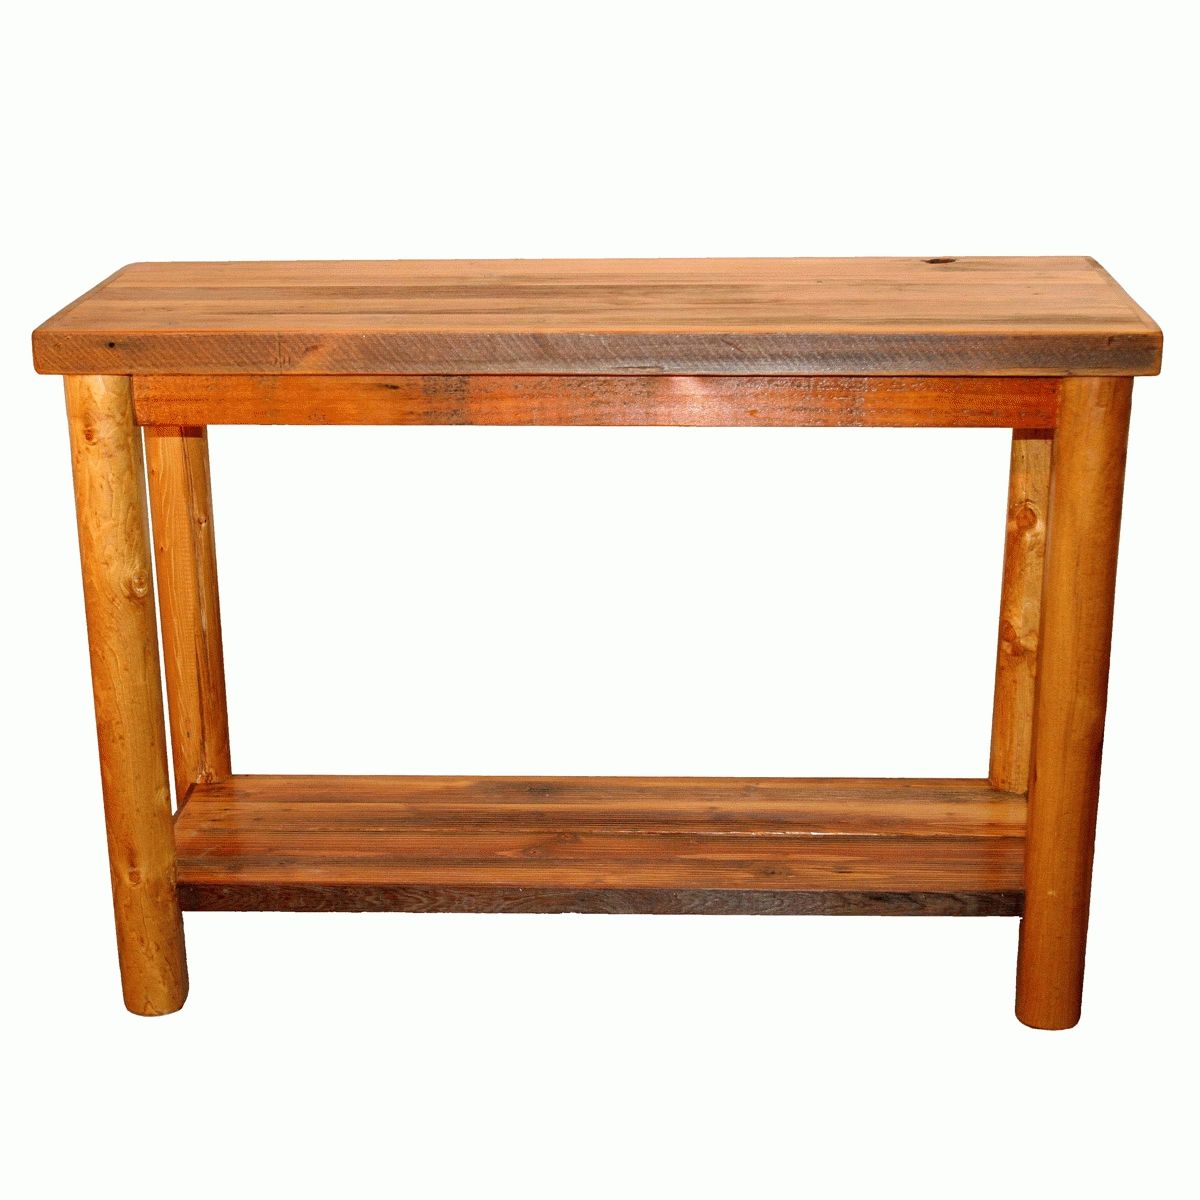 Barnwood Sofa Table With Shelf Intended For Barnwood Sofa Tables (Photo 12 of 15)